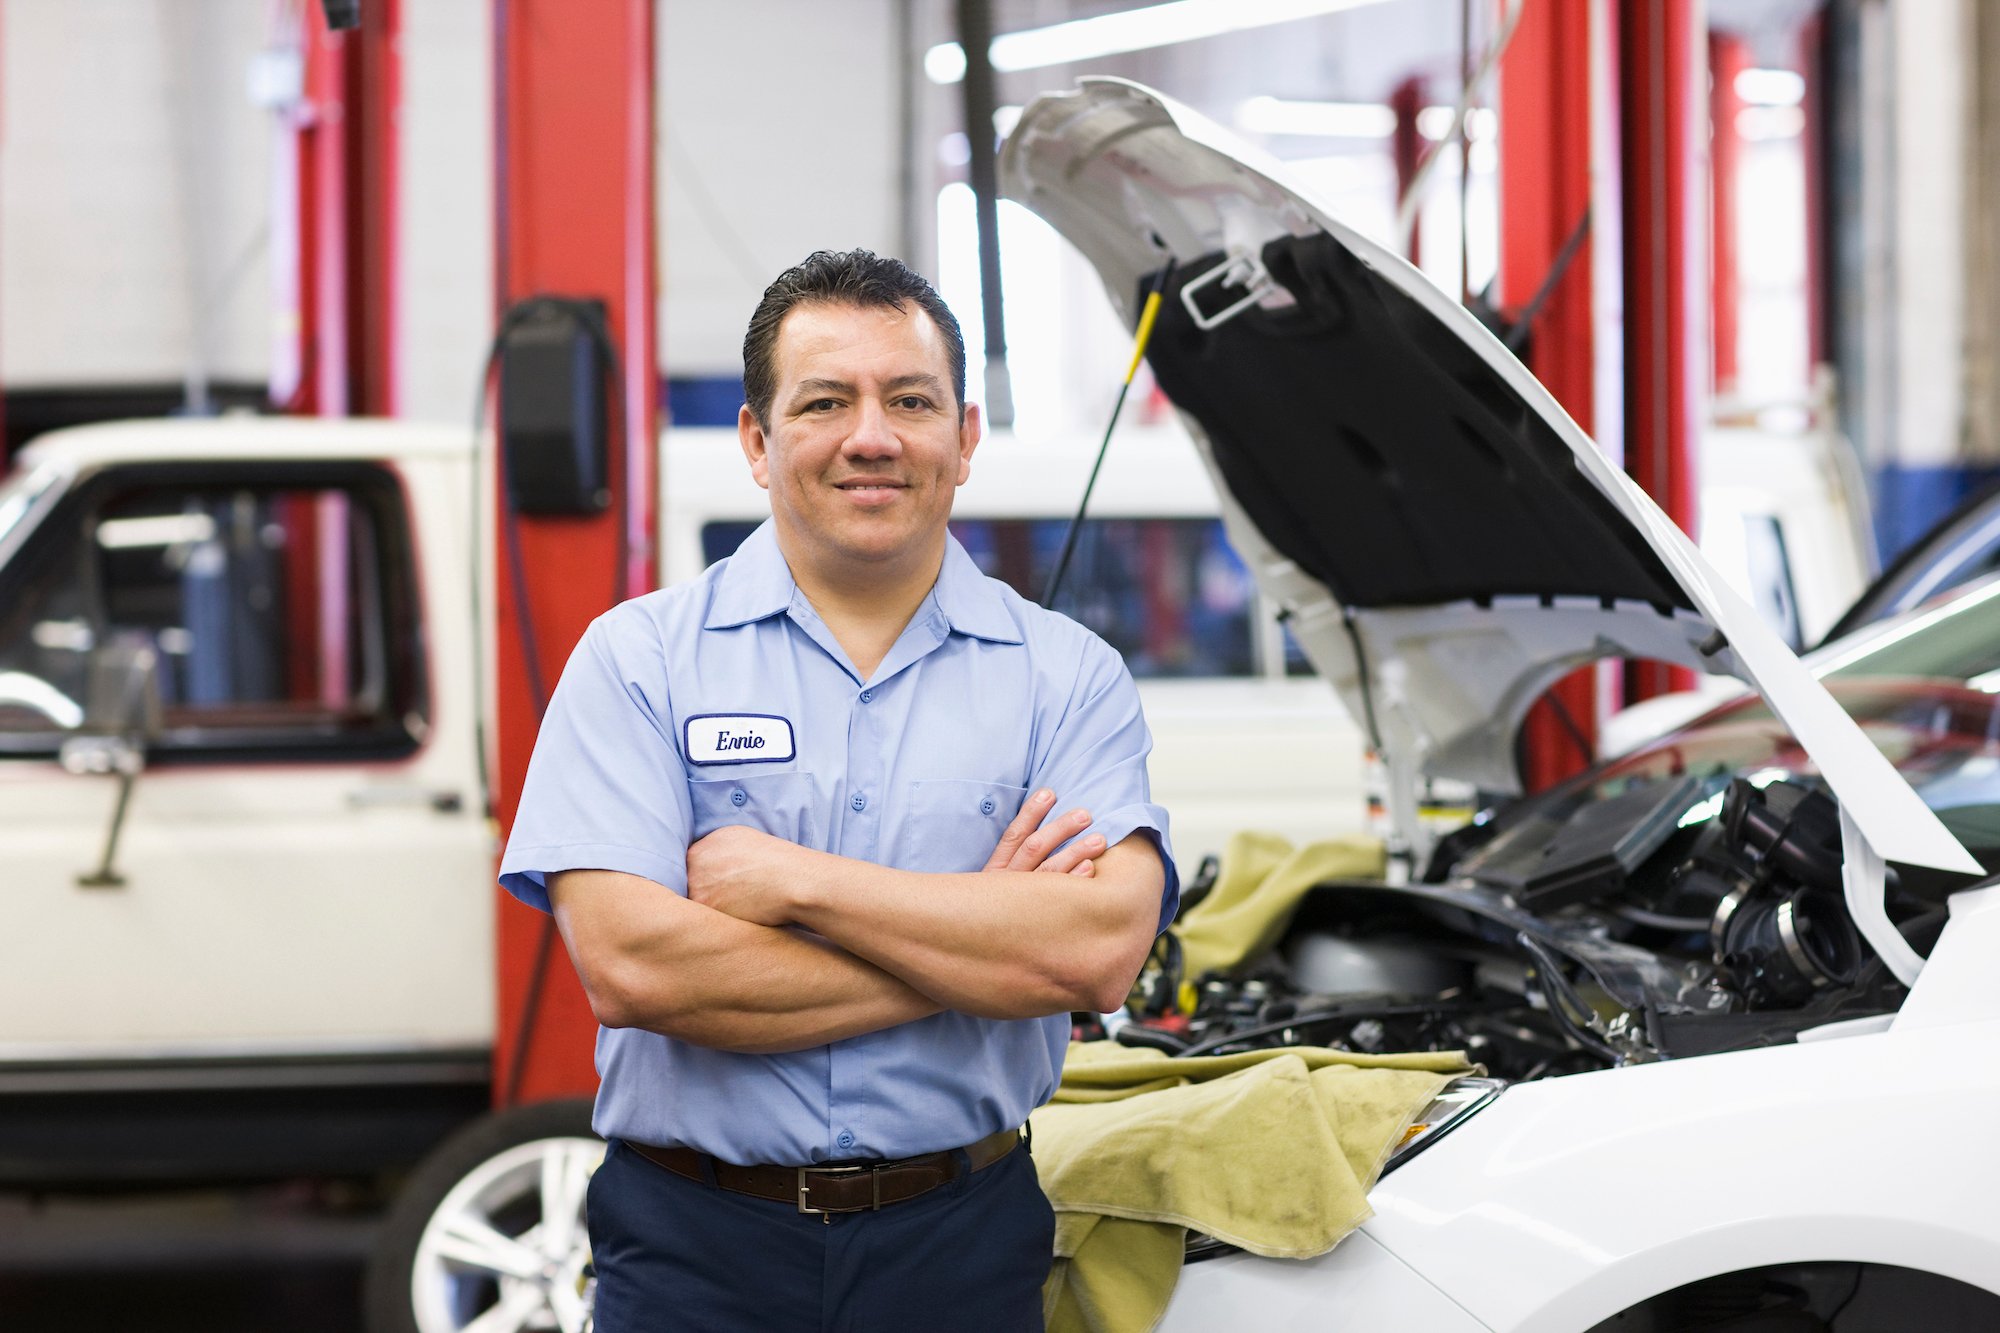 Portrait Of Hispanic Male Mechanic In Auto Repair 2022 03 04 02 43 16 Utc